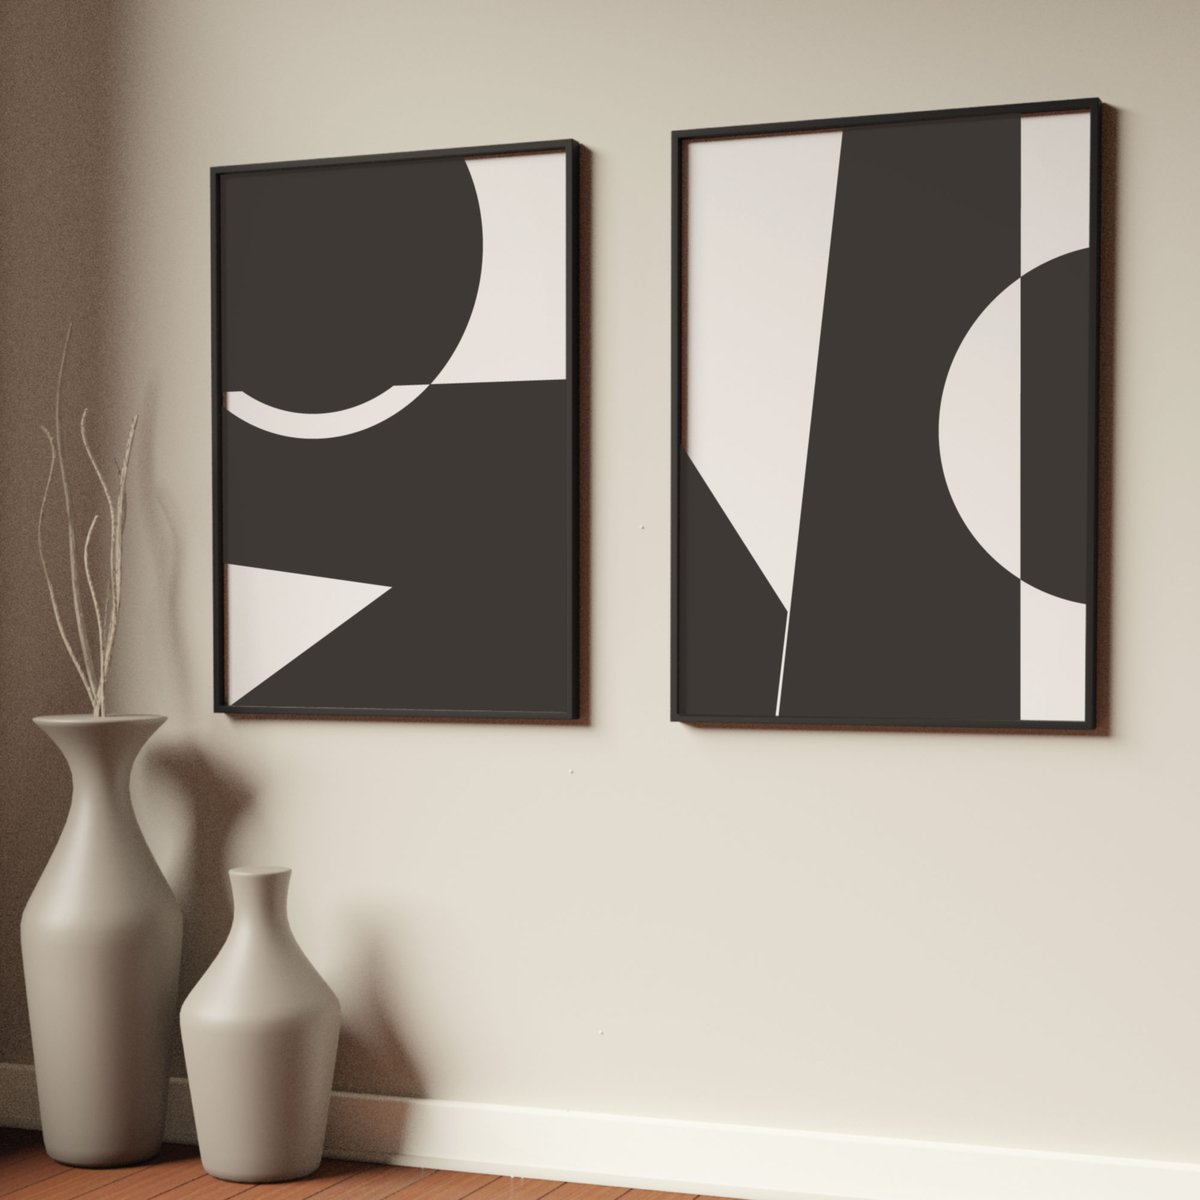 Abstract Minimalist Wall Decor - Print Set of 2
.
etsy.com/listing/144466…
.
#wallartdesign #minimalistartwork #minimalistlife #roomdecorating #interiordesign #wallartprint #bohoroomdecor #roomdecorationideas #wallartideas #homeliving #wallartprints #minimalistinterior